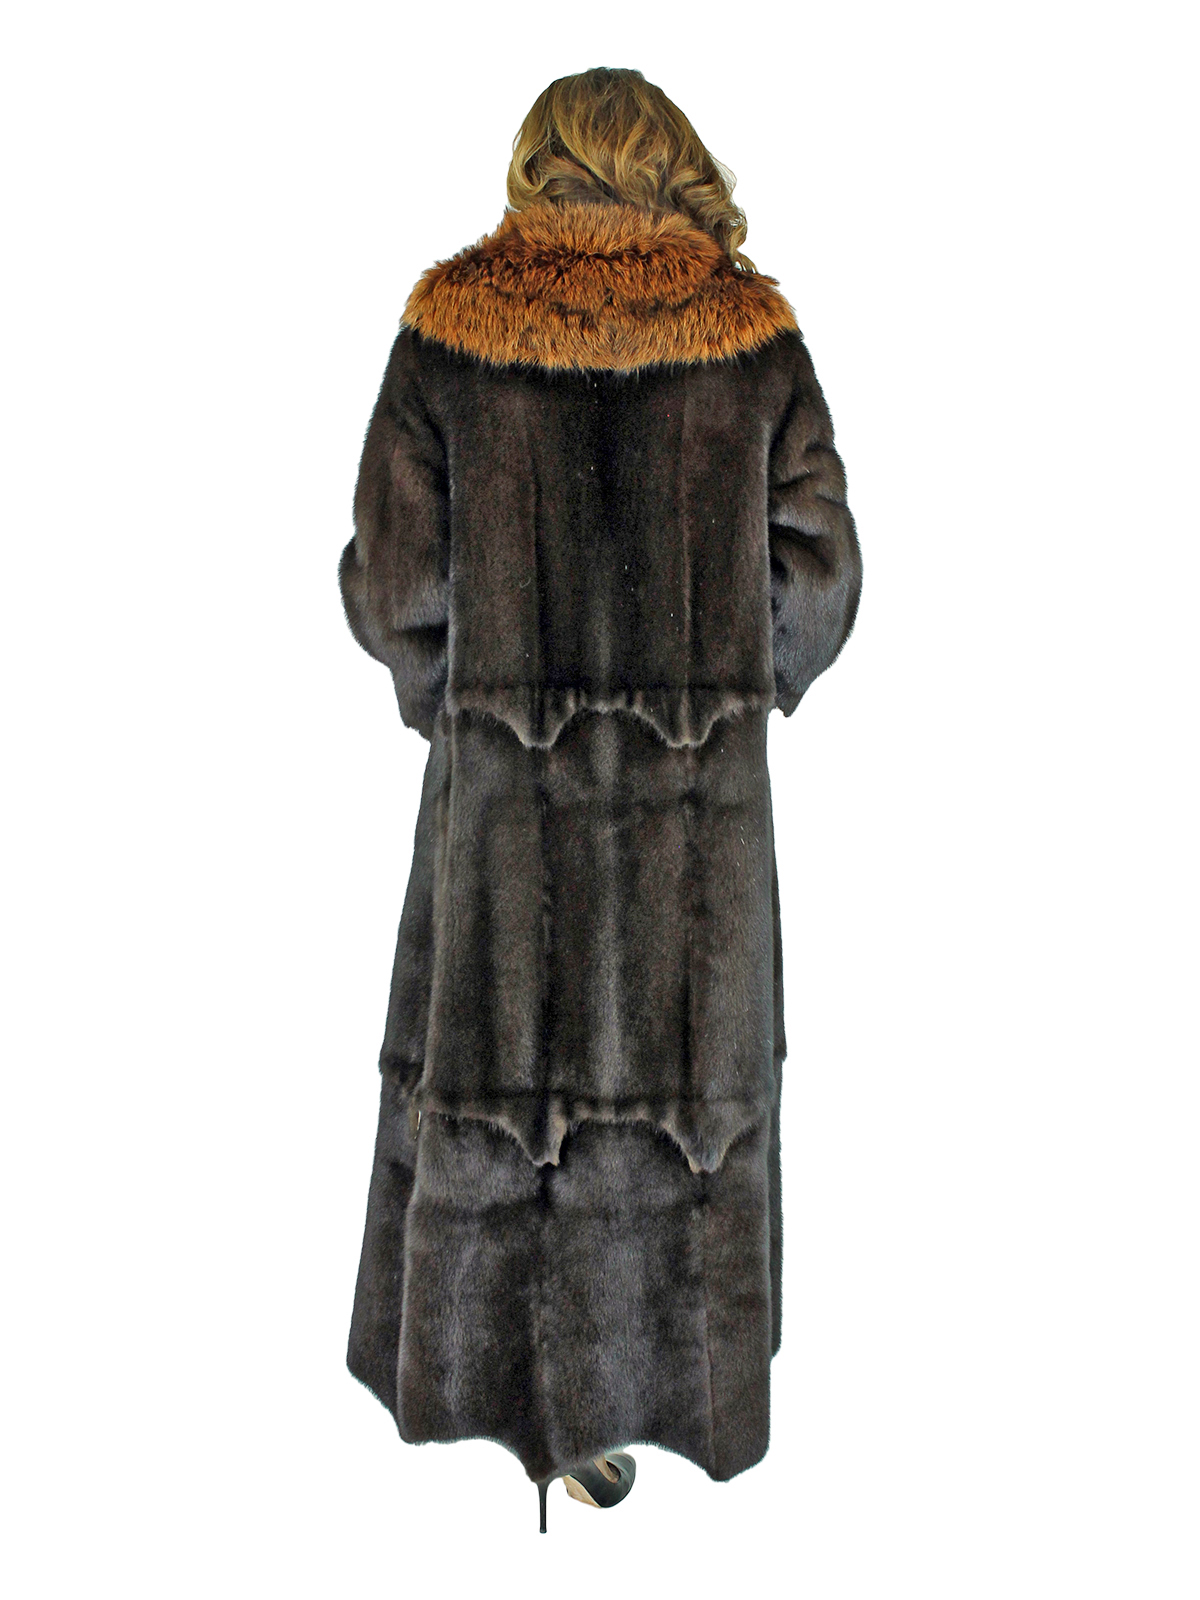 Mahogany Female Mink Fur Coat with Large Fox Collar - Women's Fur Coat ...